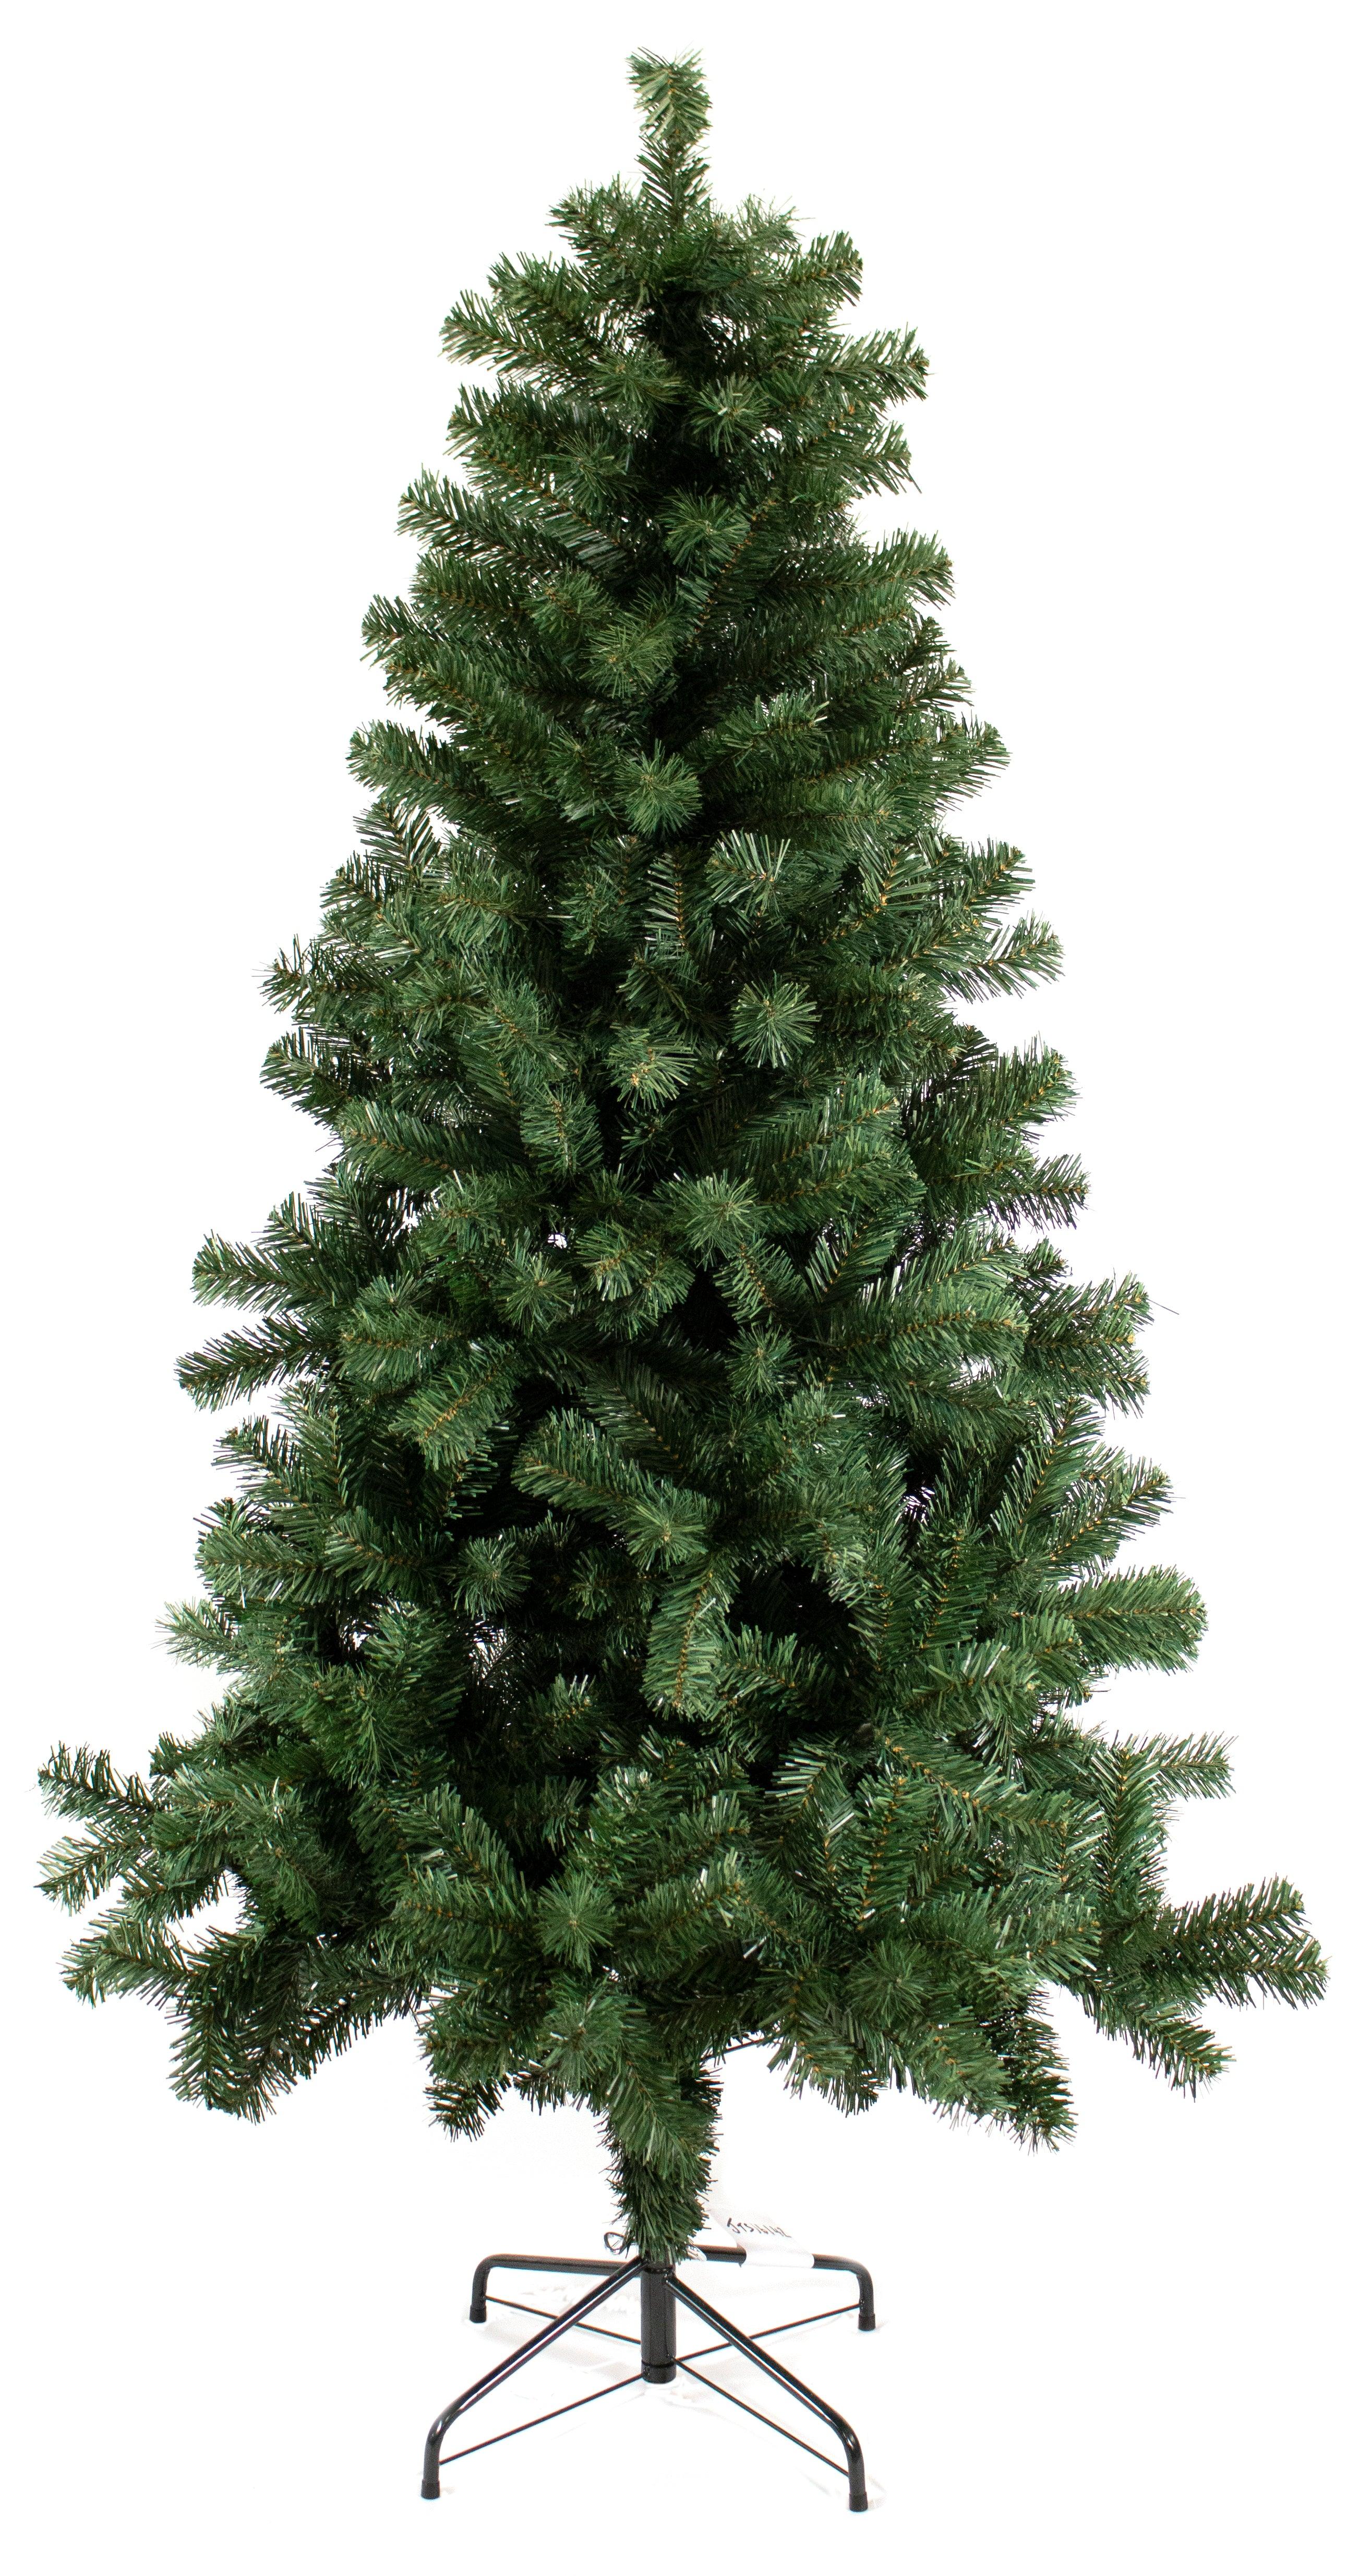 Juniper Green Artificial Christmas Tree 7ft / 210cm - General Hardware Supplies Homevalue